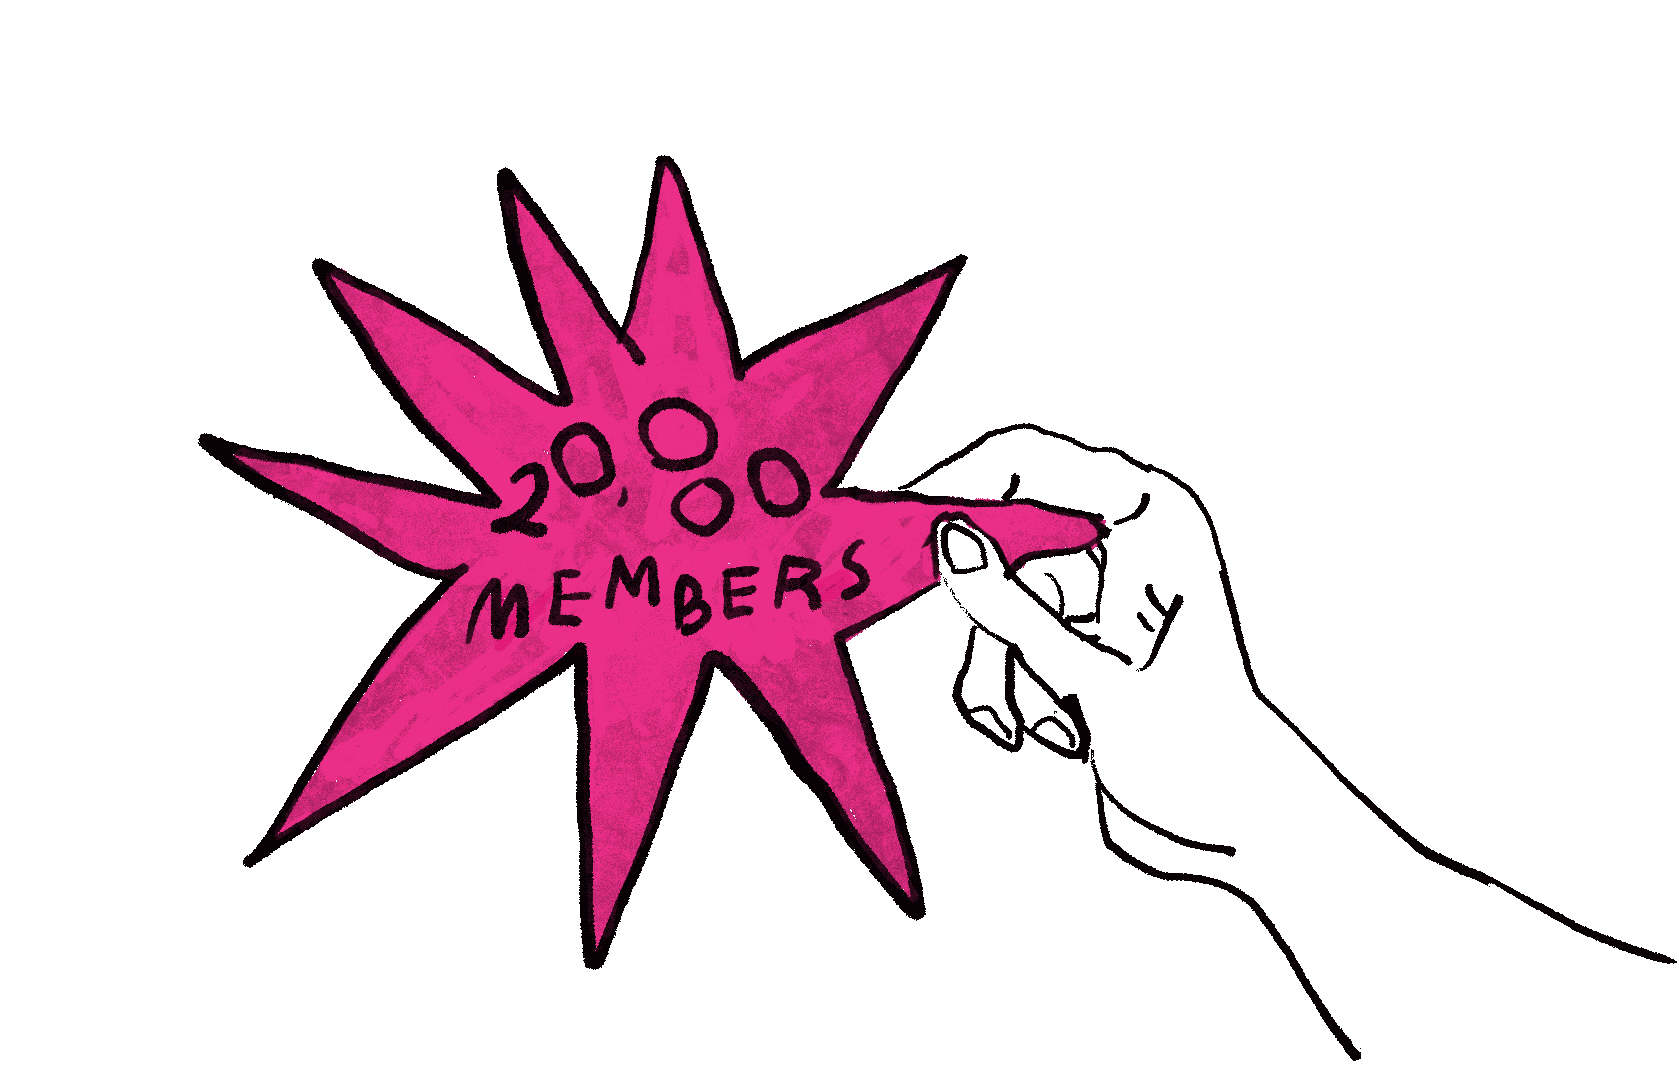 20,000 Members by Tobi Meuwissen